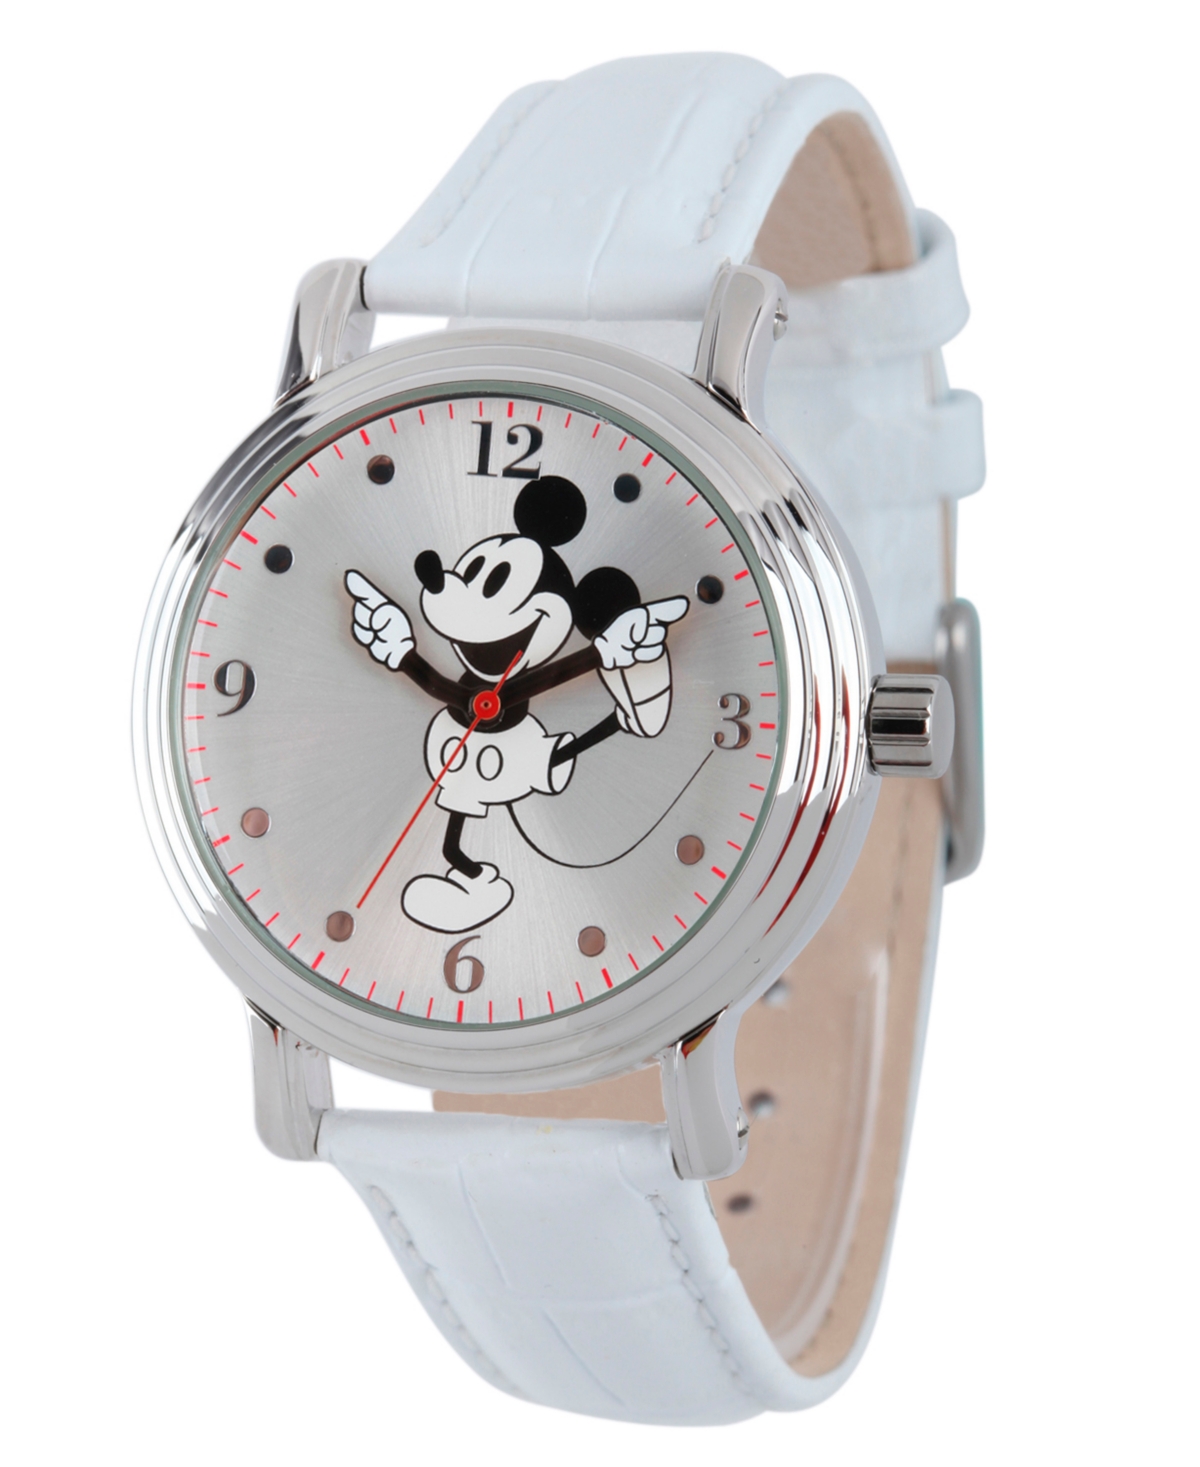 Disney Mickey Mouse Women's Shiny Silver Vintage Alloy Watch - White